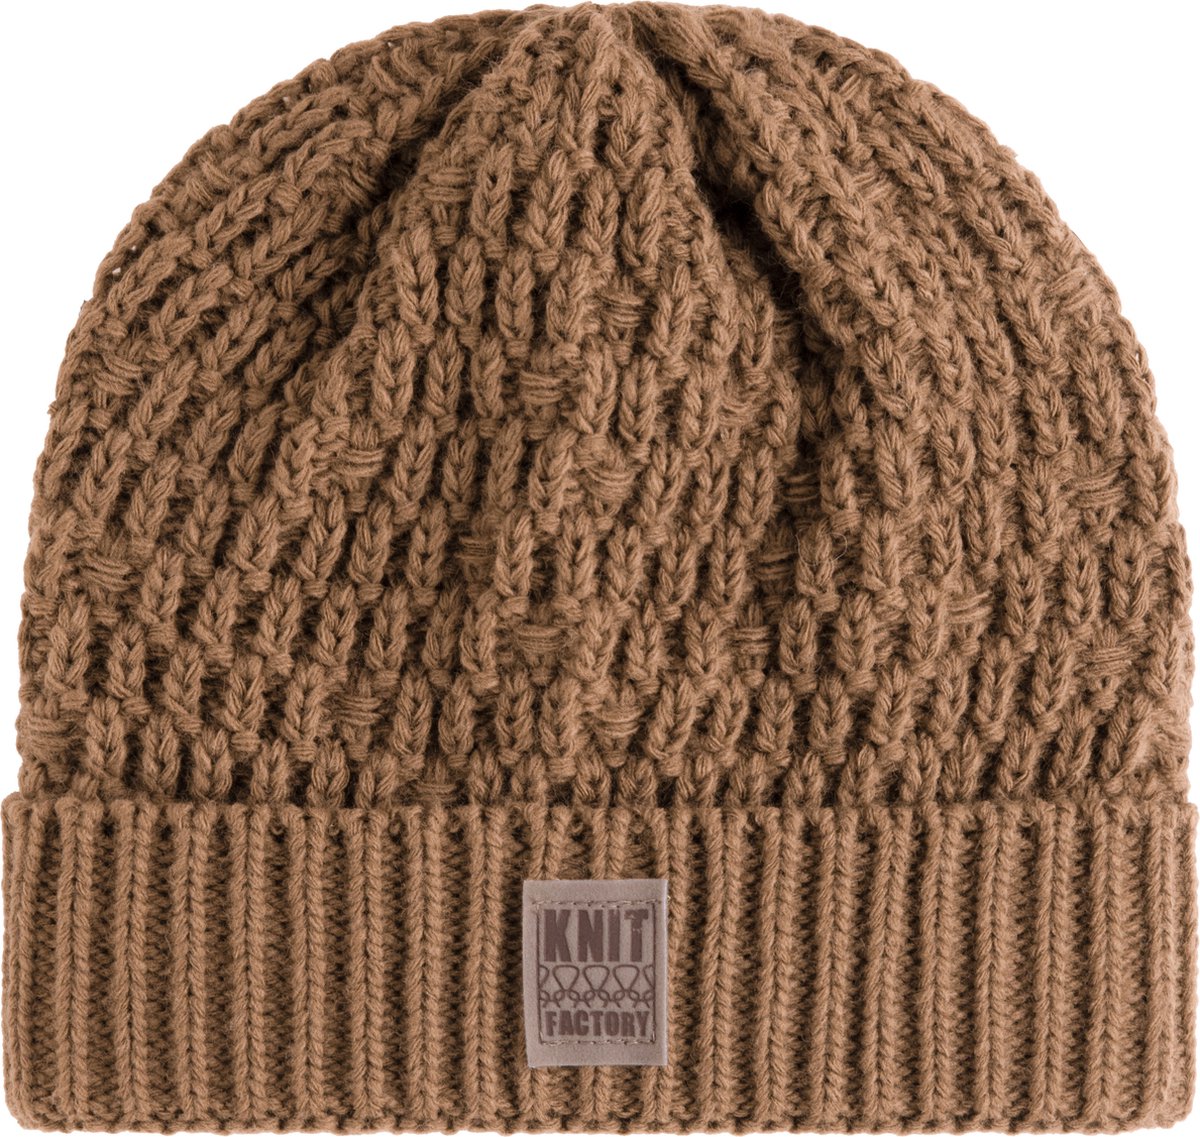 Knit Factory Jaida Gebreide Muts Heren & Dames - Beanie hat - Nude - Warme bruine Wintermuts - Unisex - One Size